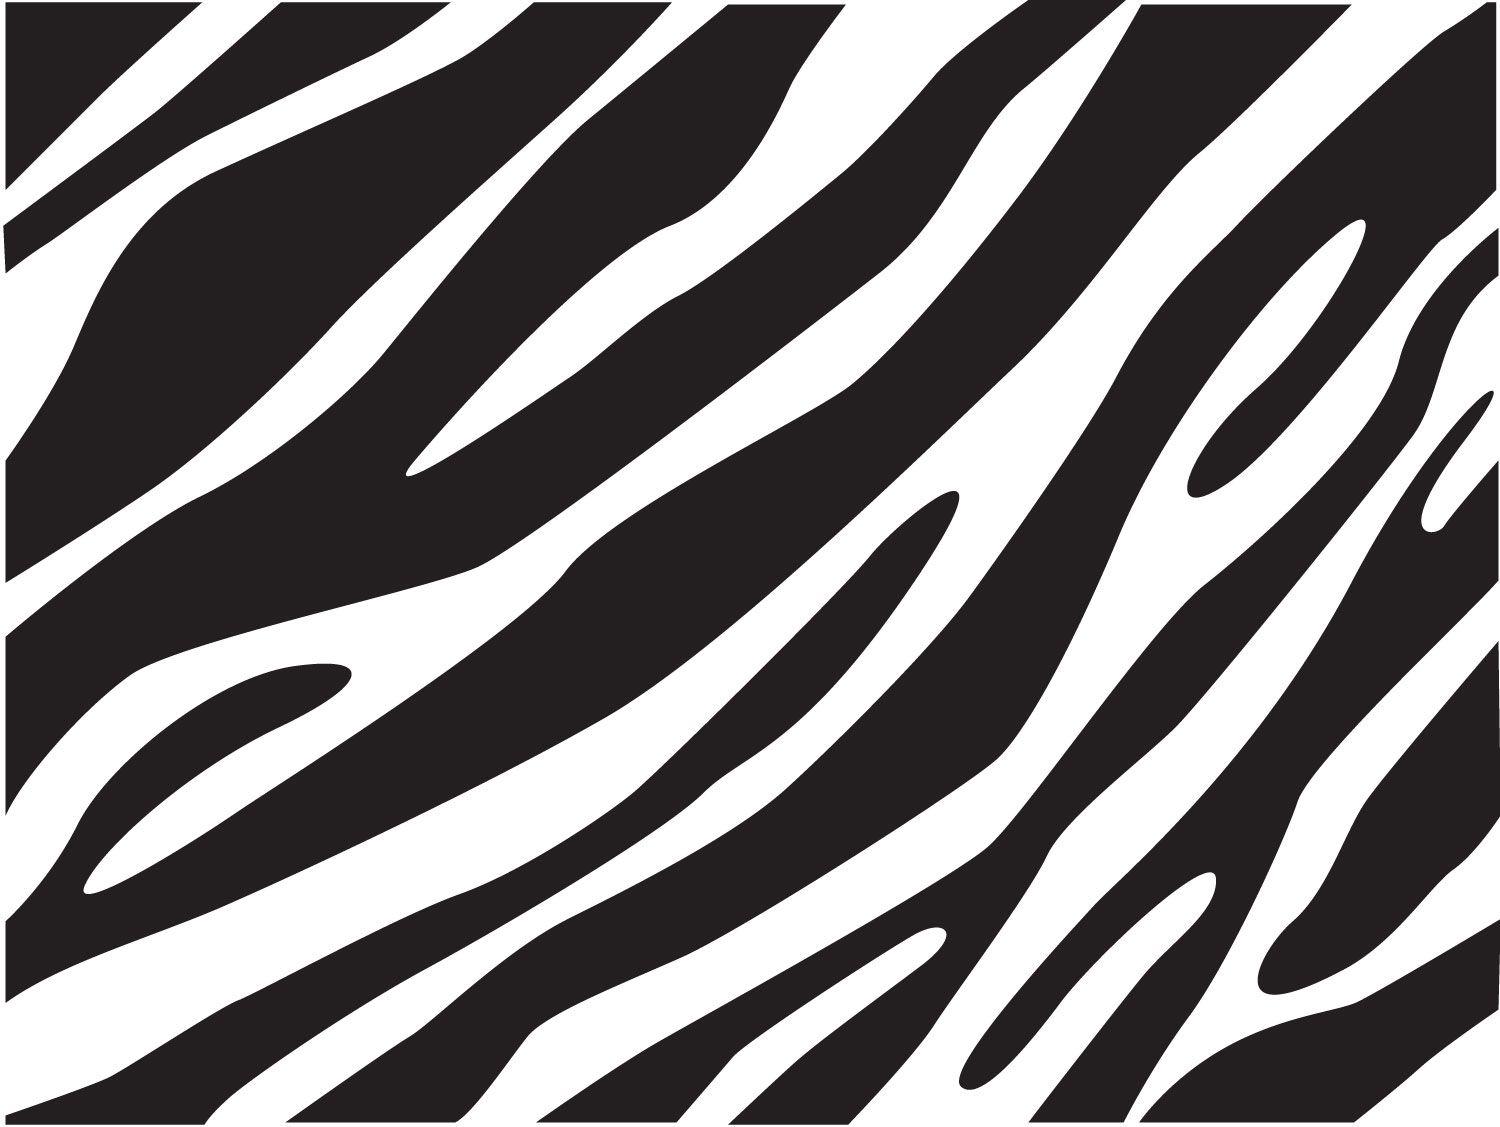  Zebra  Pattern  Wallpapers Top Free Zebra  Pattern  